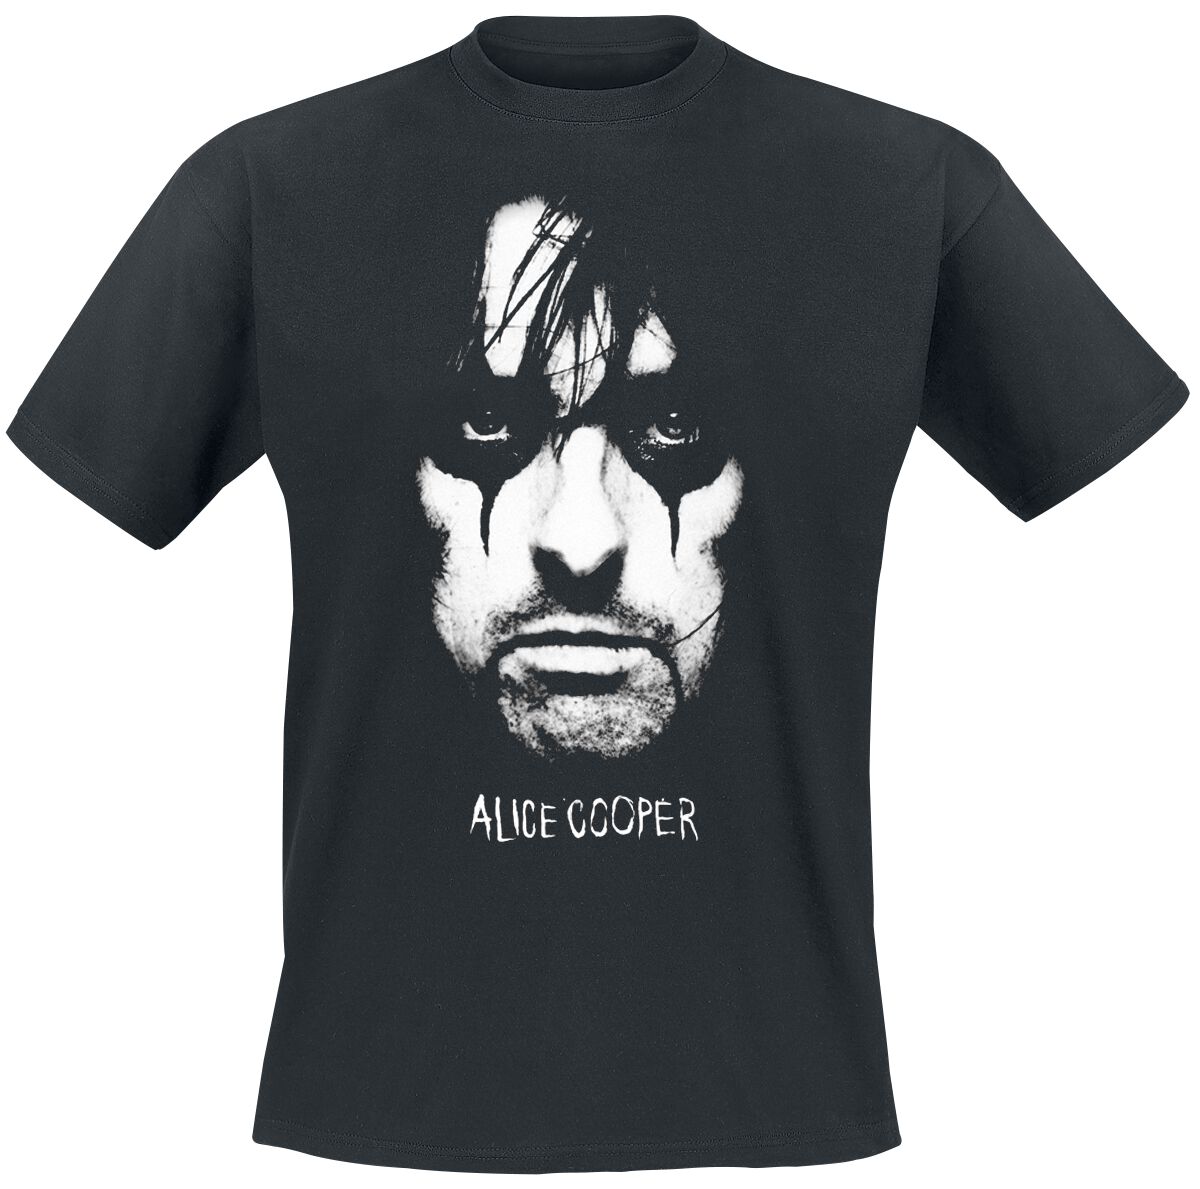 Alice Cooper Portrait T-Shirt schwarz in M